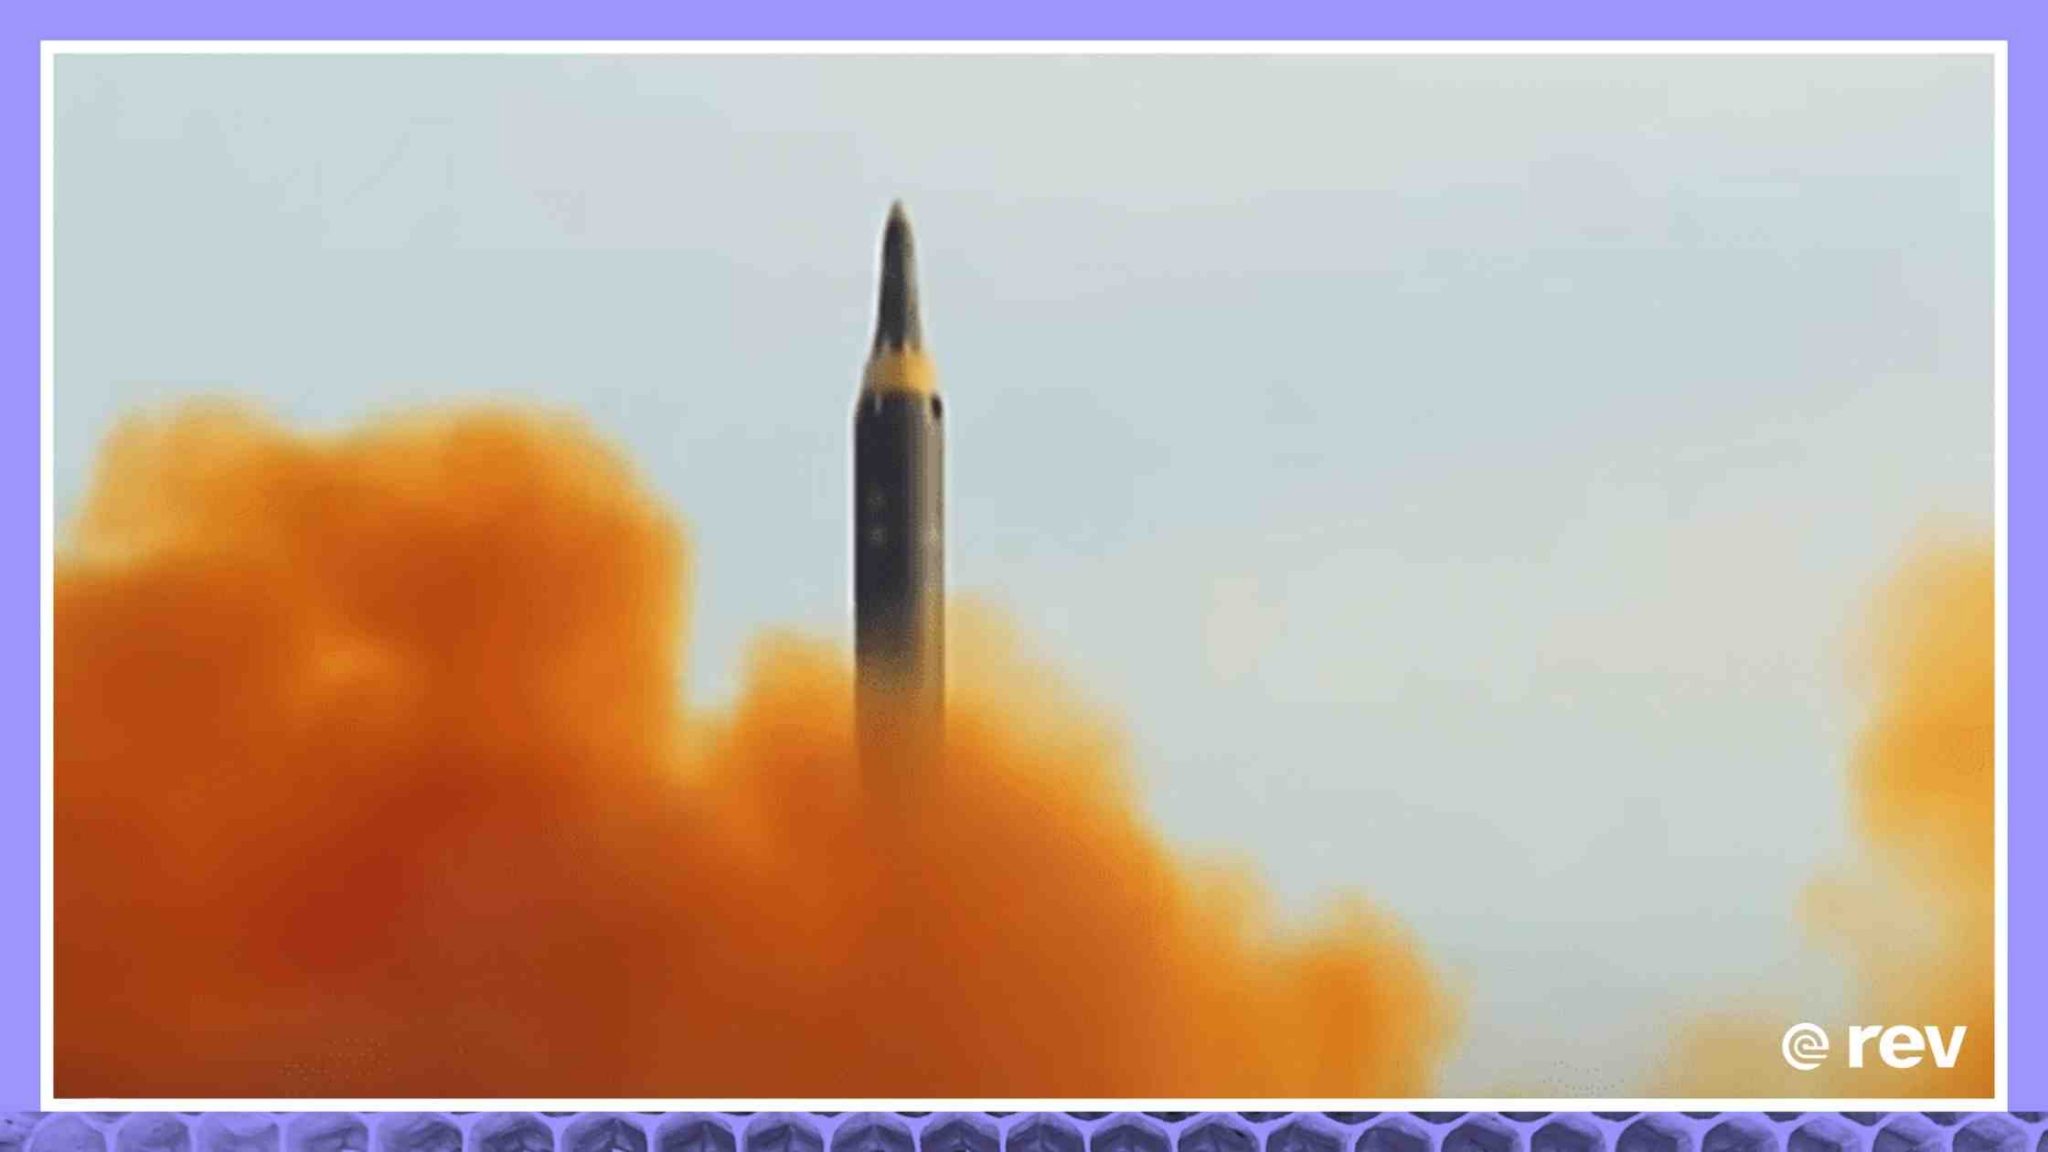 North Korea's seventh missile launch in recent days Transcript